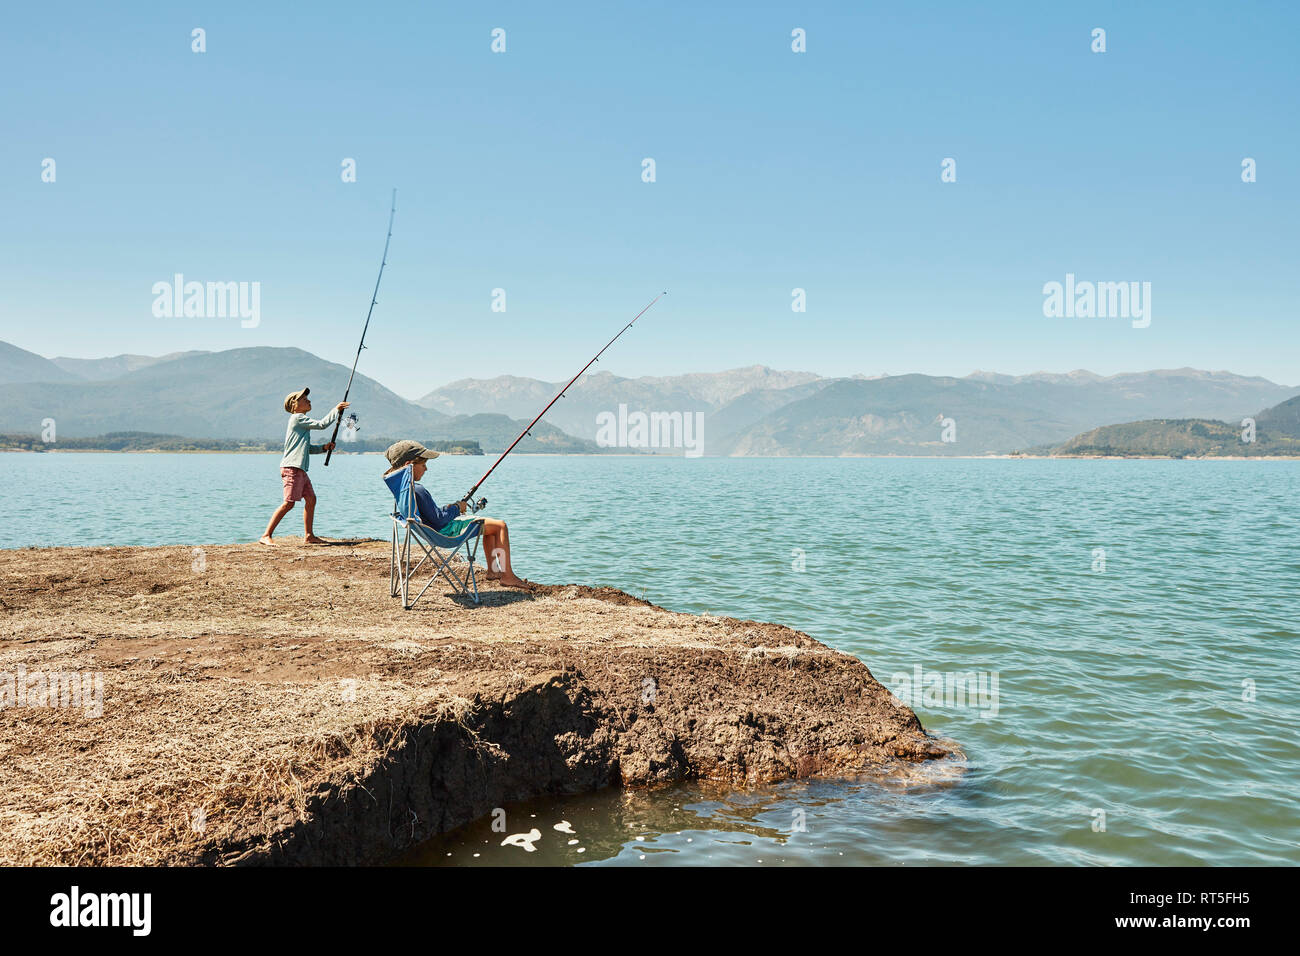 Chile, Talca, Rio Maule, two boys fishing in lake Stock Photo